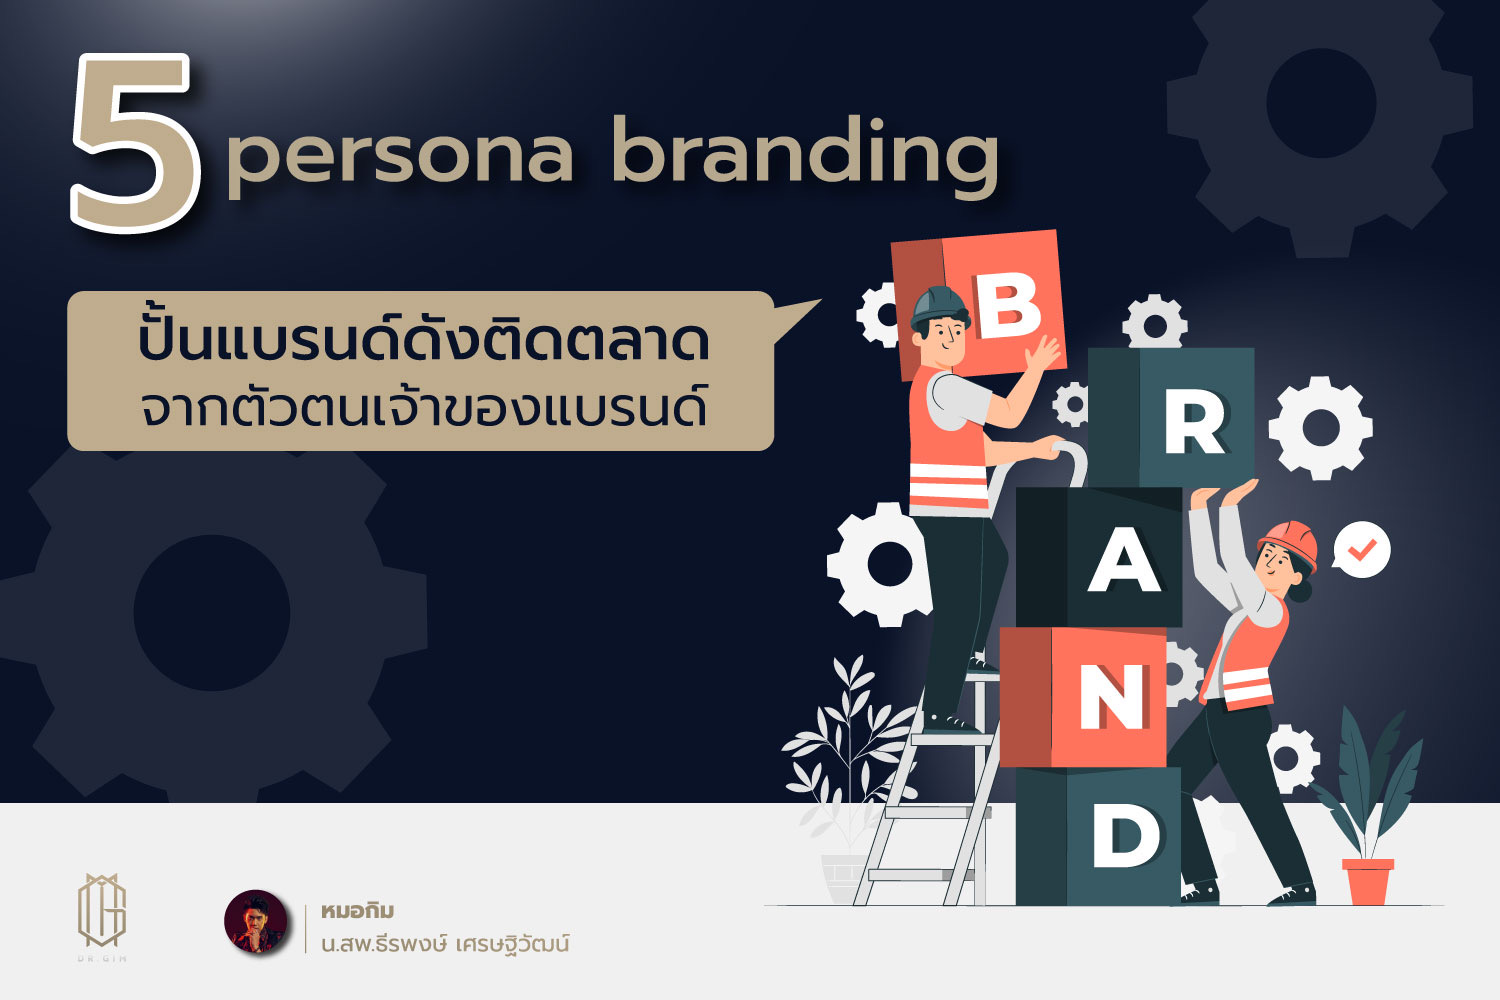 5 persona branding ปั้นแบรนด์ดัง ติดตลาดจากตัวตนเจ้าของแบรนด์